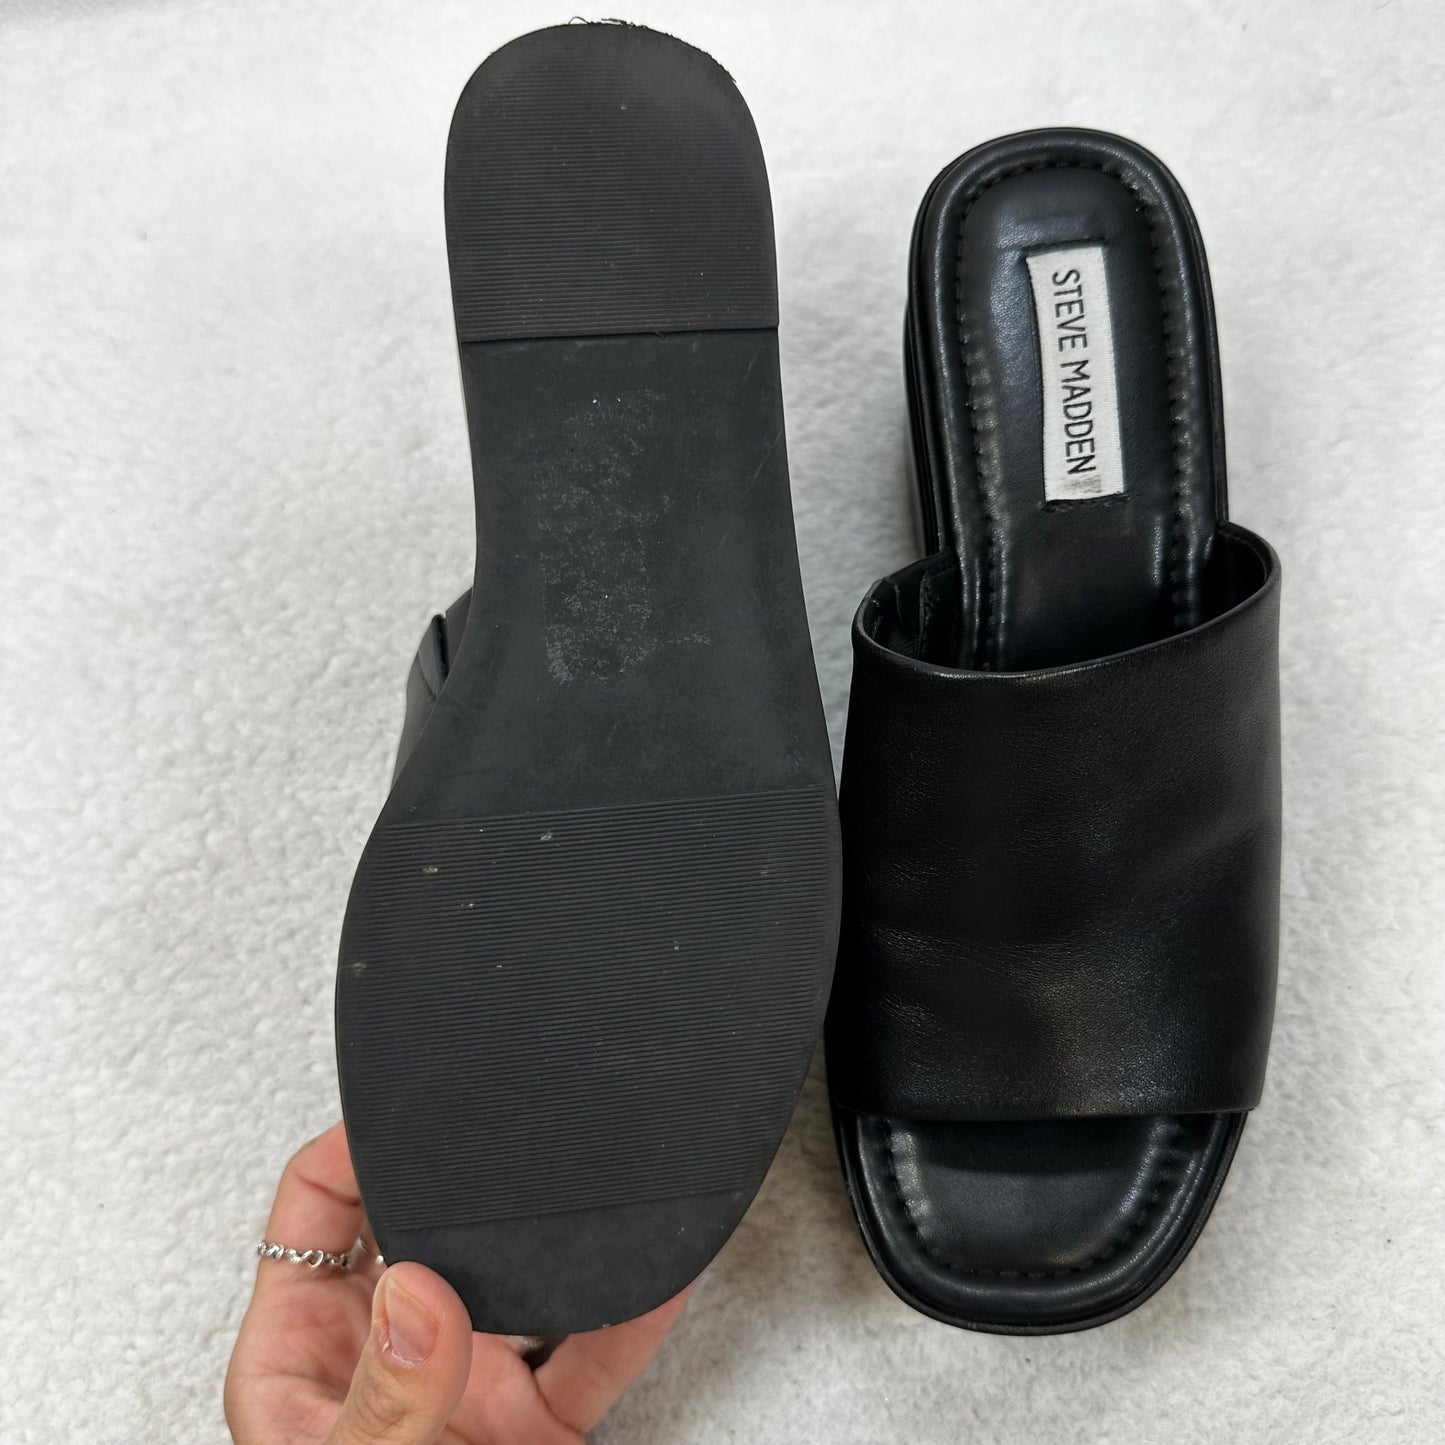 Black Shoes Heels Block Steve Madden, Size 7.5